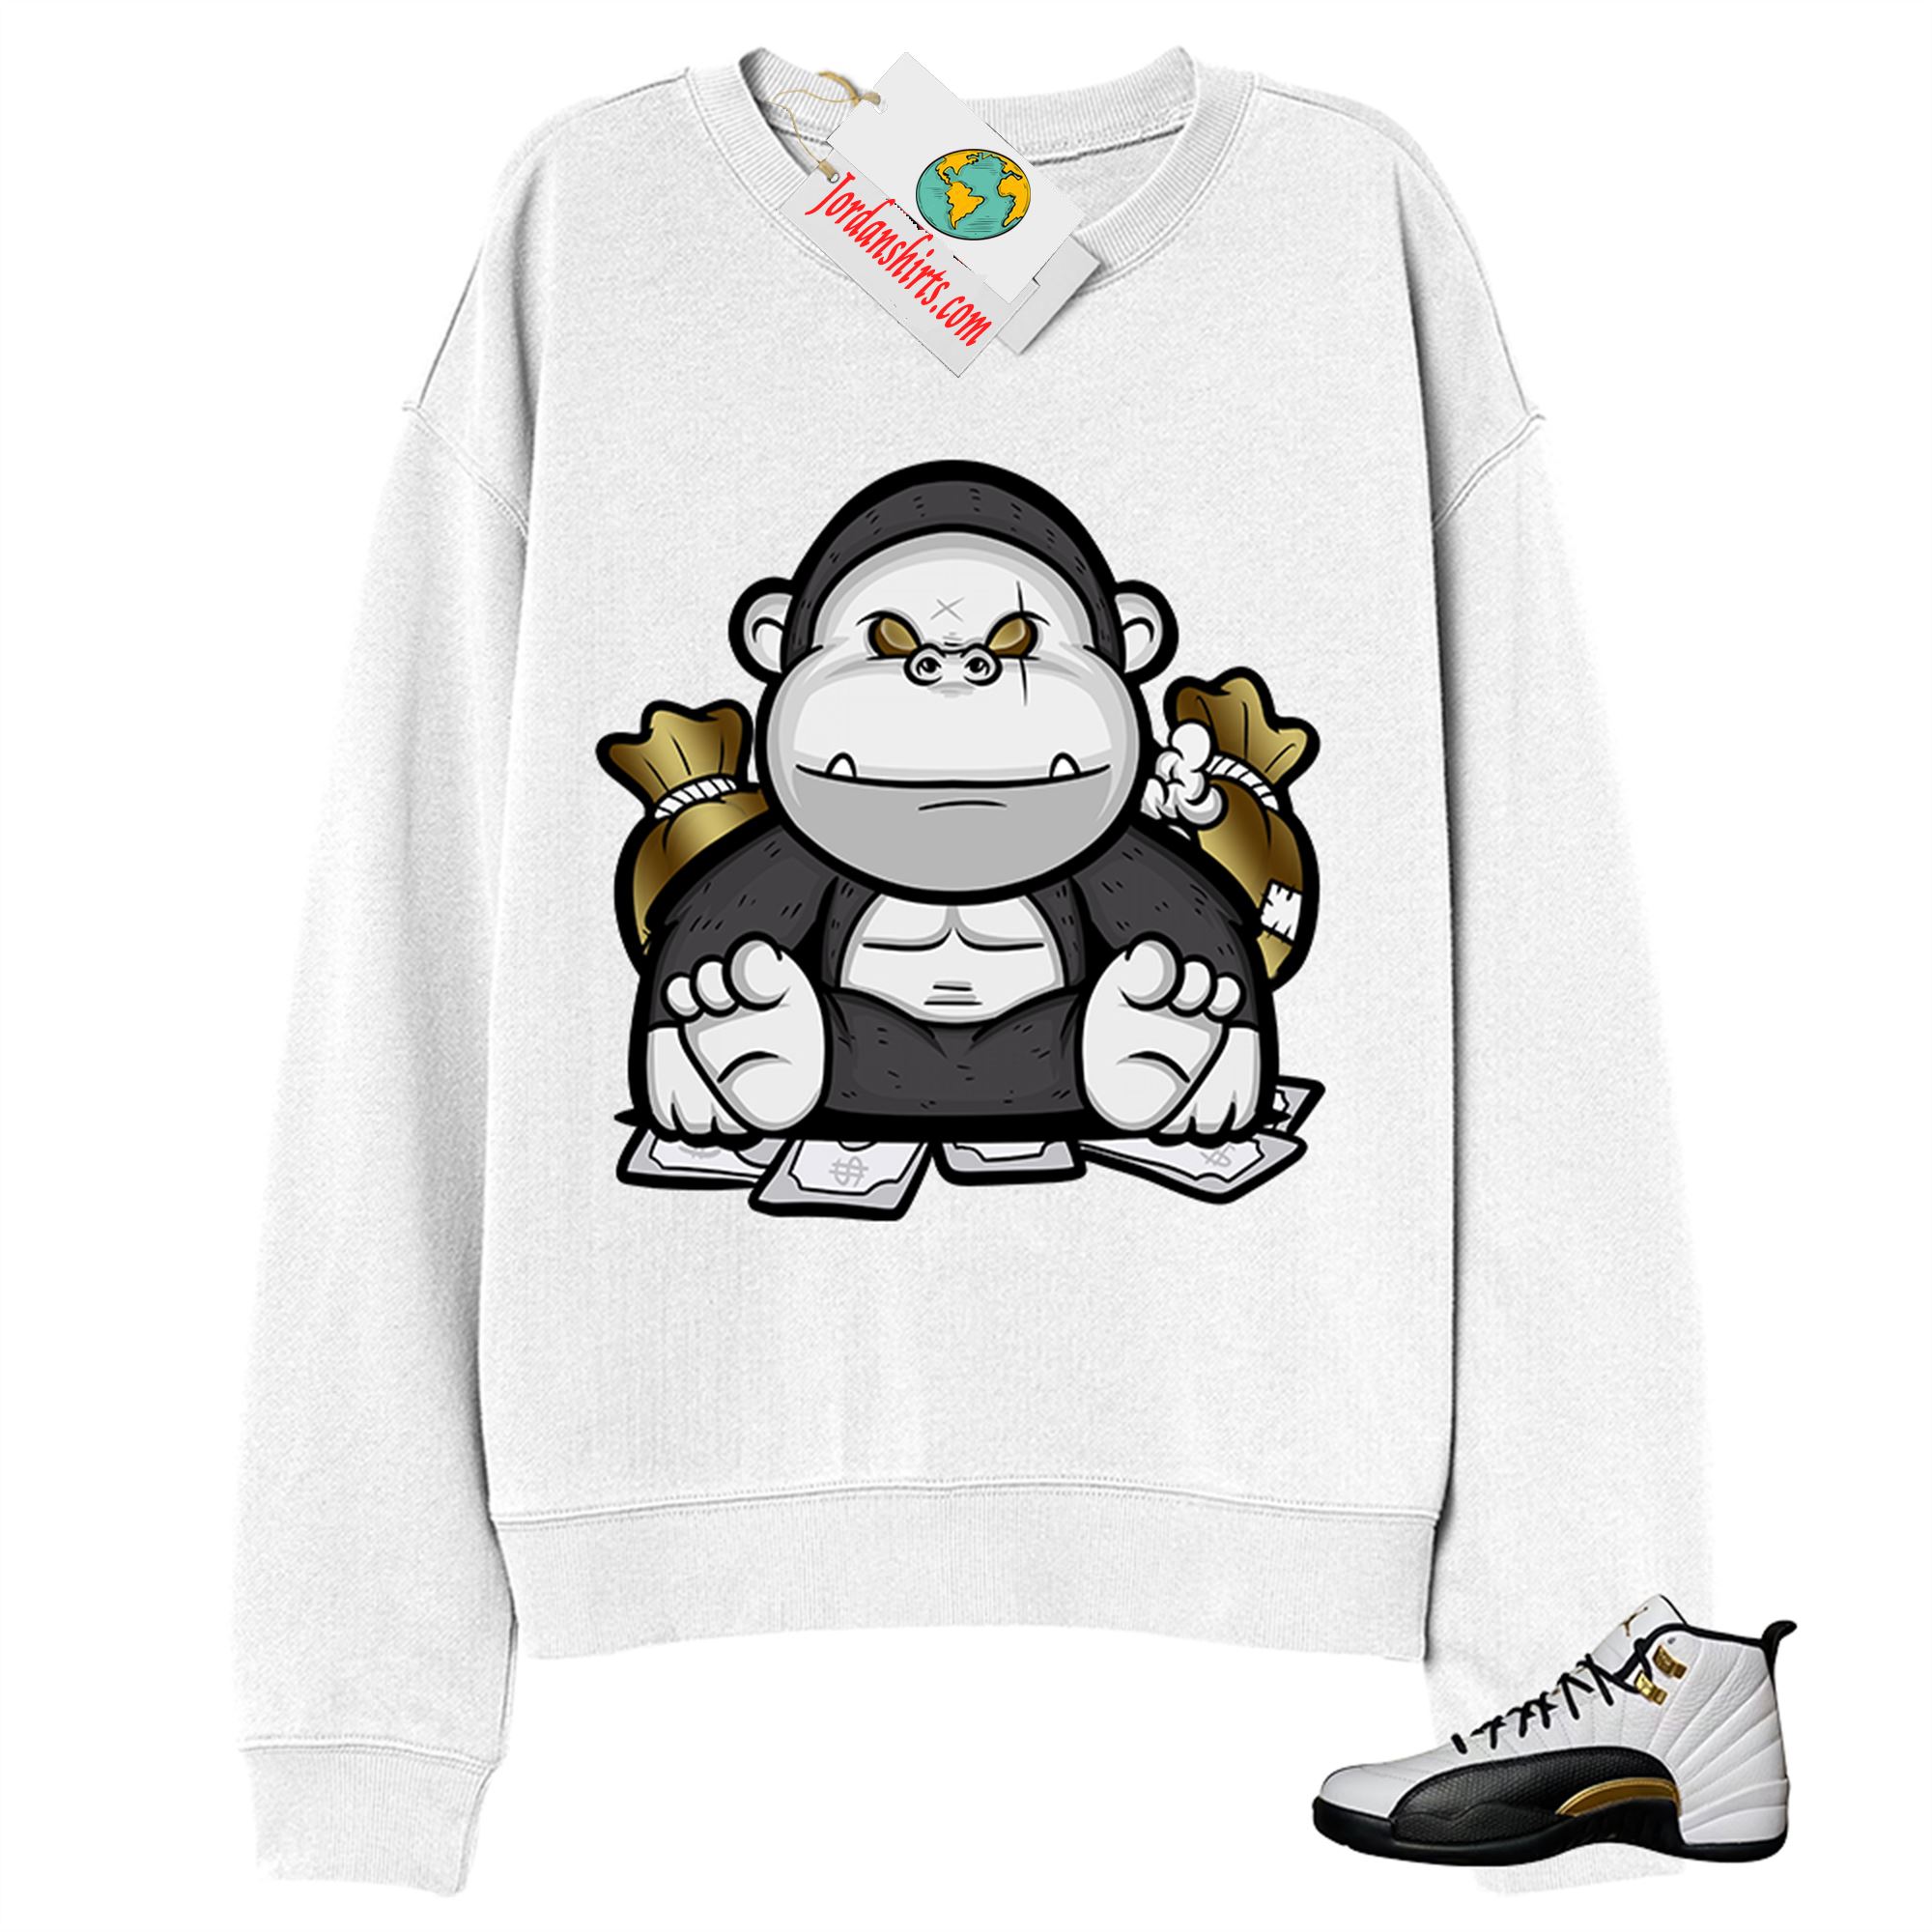 Jordan 12 Sweatshirt, Rich Gorilla With Money White Sweatshirt Air Jordan 12 Royalty 12s Plus Size Up To 5xl